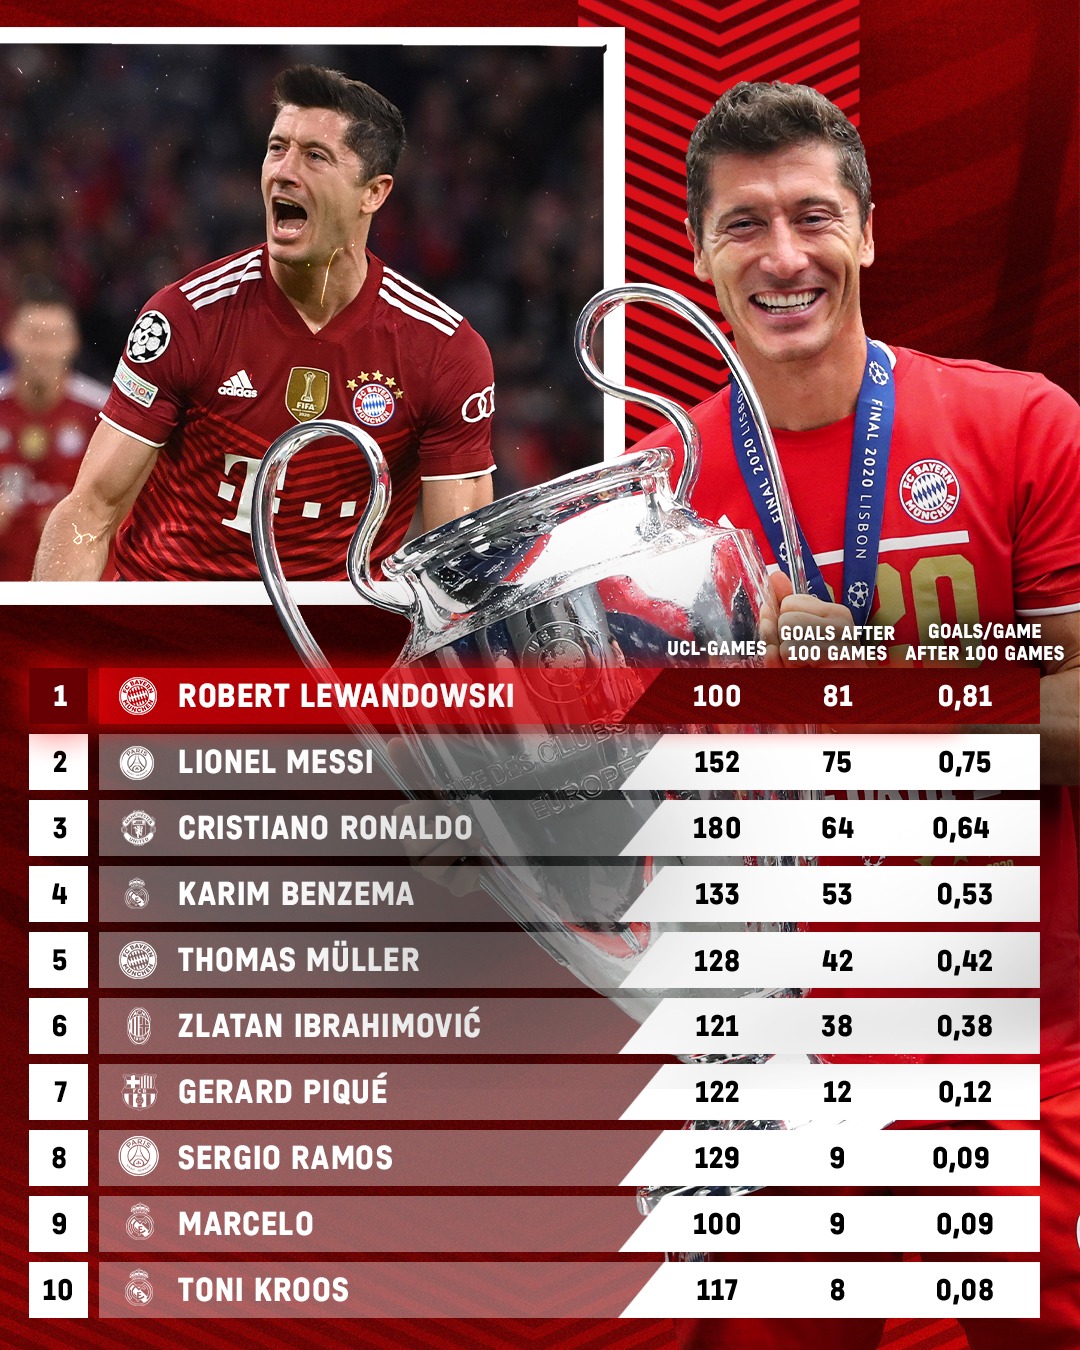 UEFA Champions League: Robert Lewandowski becomes the fastest player to reach 80 UCL goals